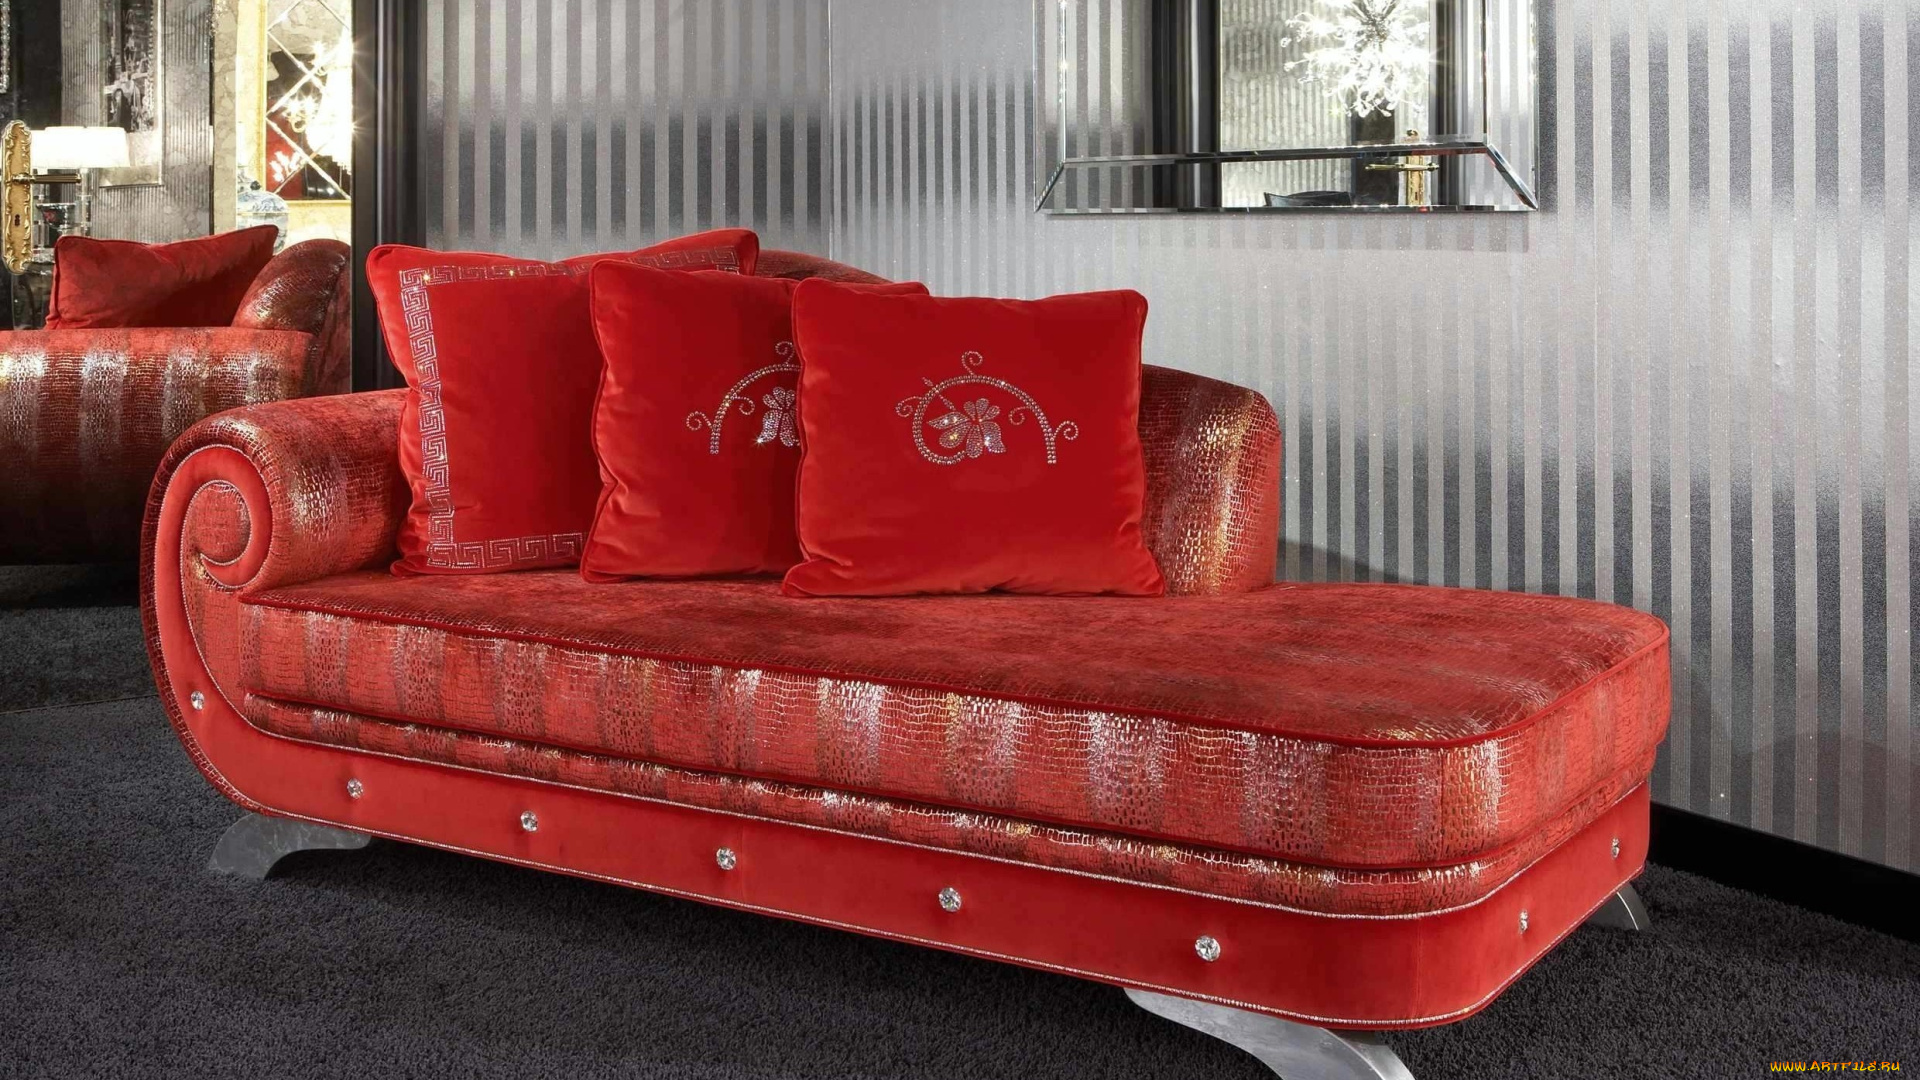 интерьер, мебель, подушки, софа, красный